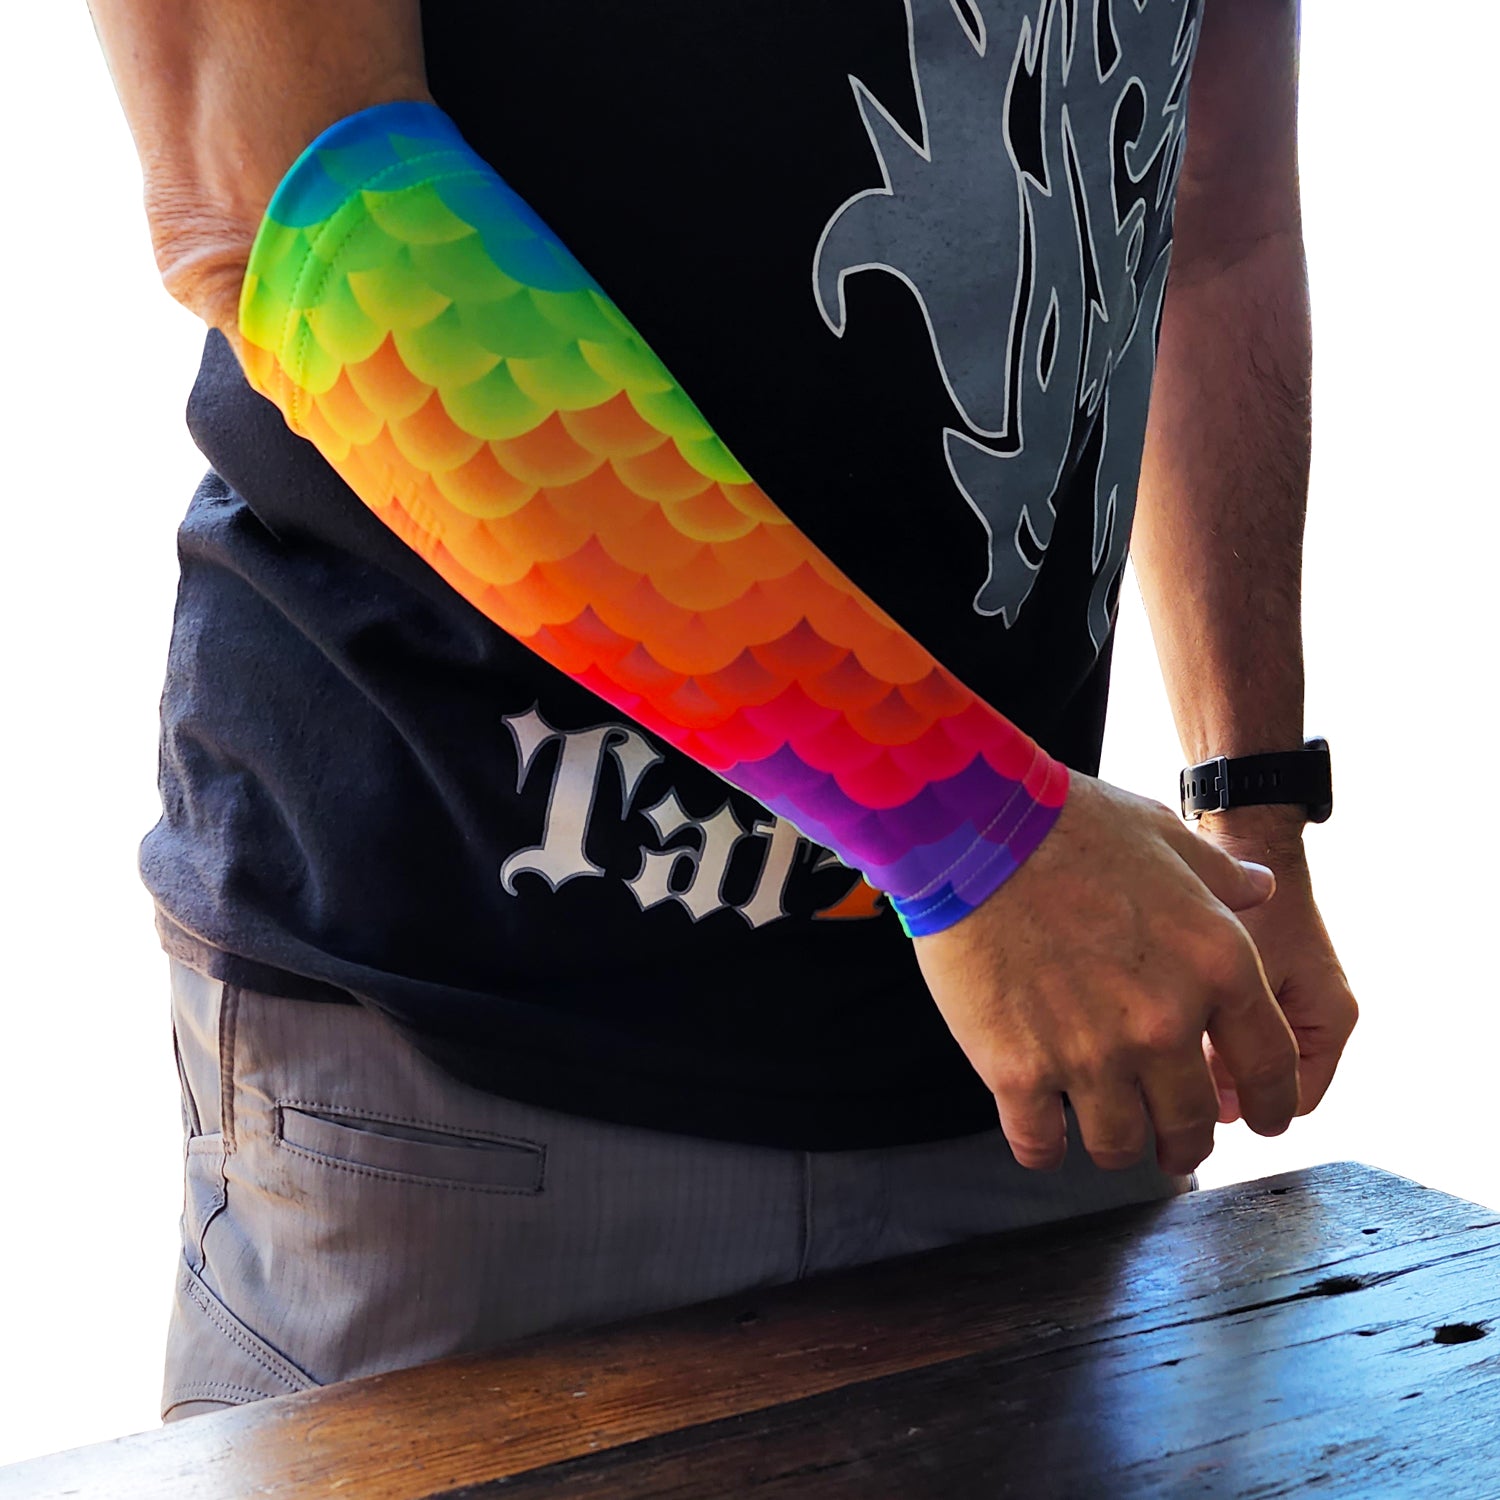 Ink Armor Tattoo Cover Up Sleeve - Forearm 9 inch (Rainbow Cloud)